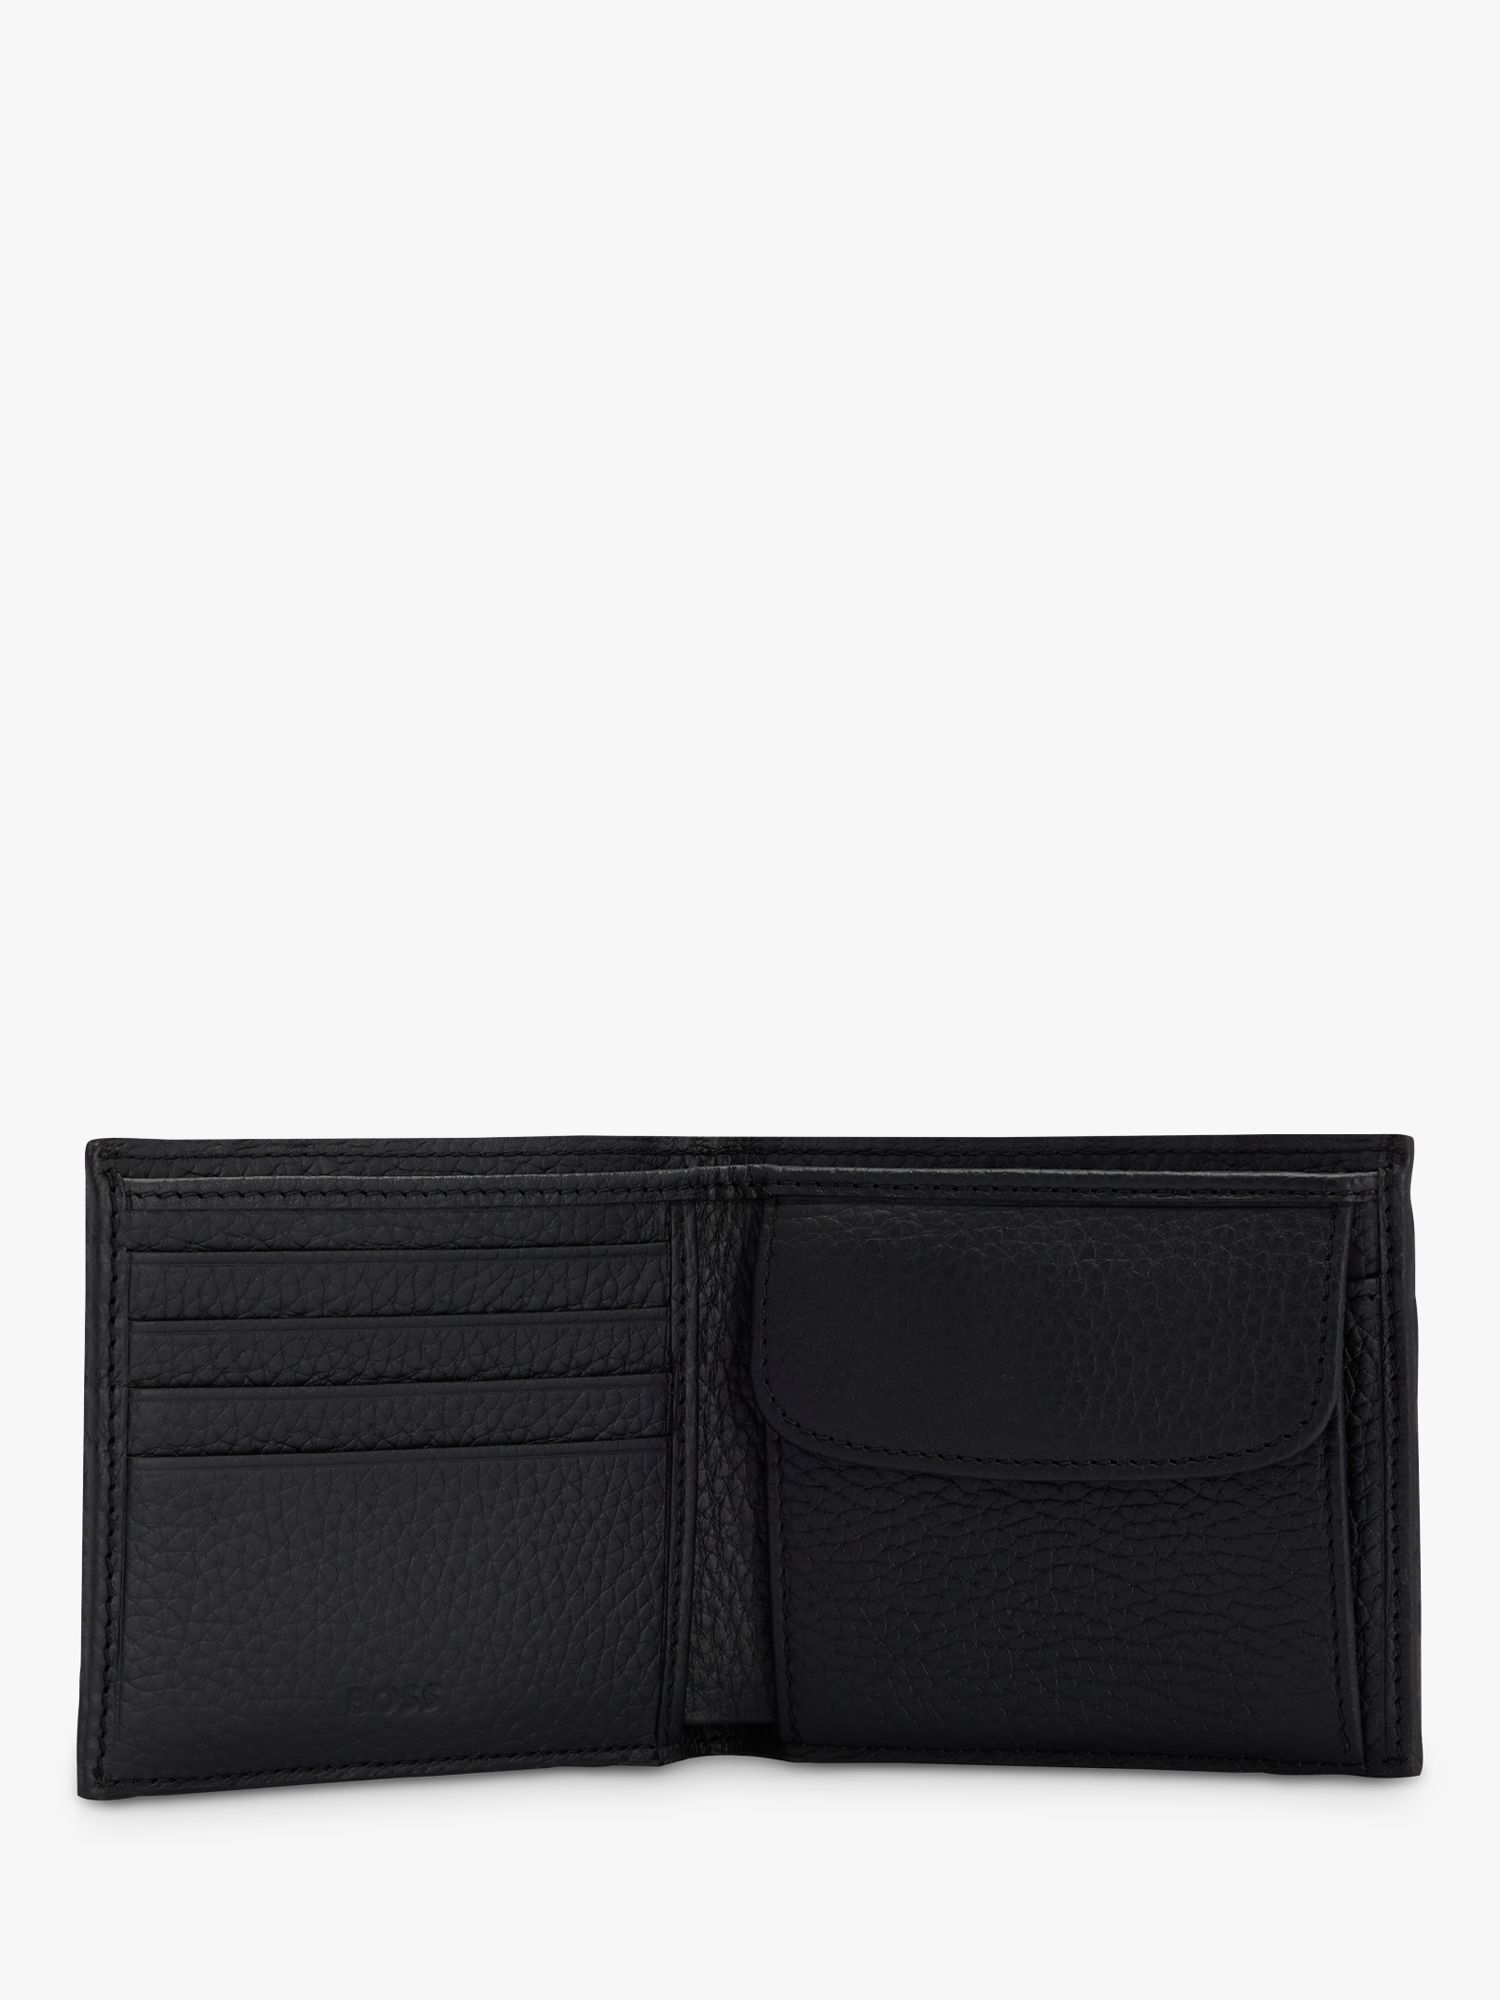 BOSS Crosstown 4 Card Slots Leather Wallet, Black, One Size